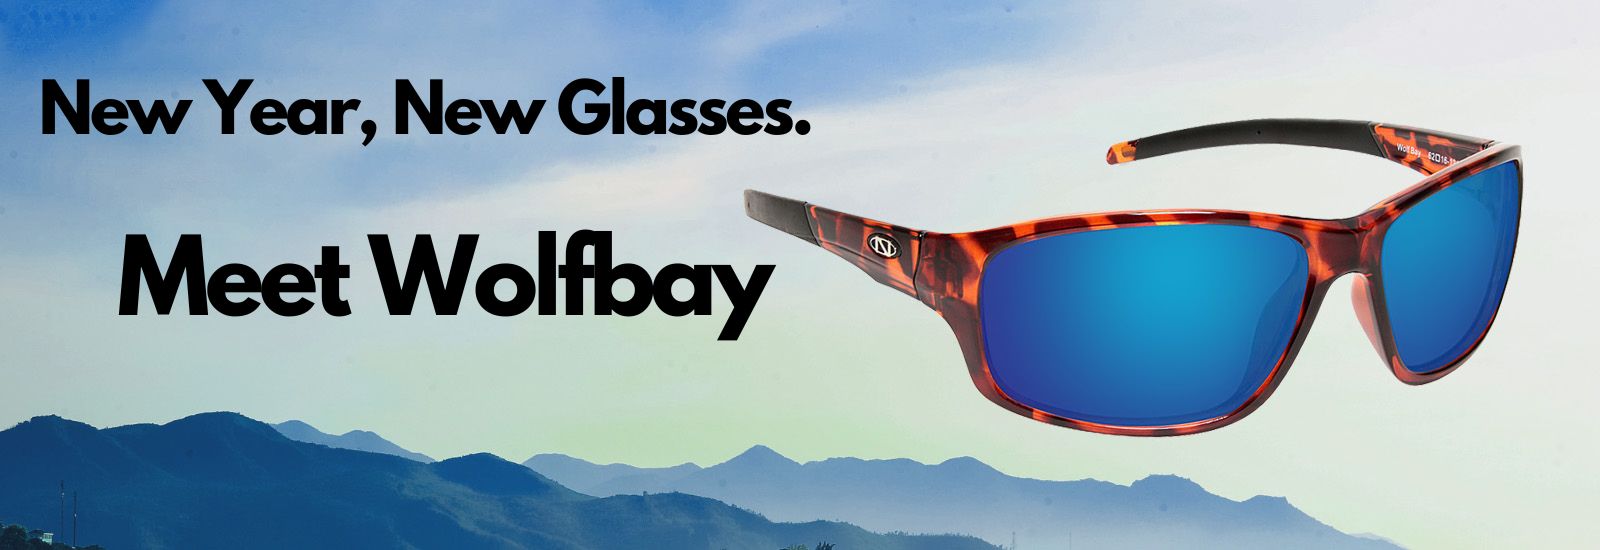 Polarized Fishing Sunglasses | Bifocal Readers | Fishing Sunglasses